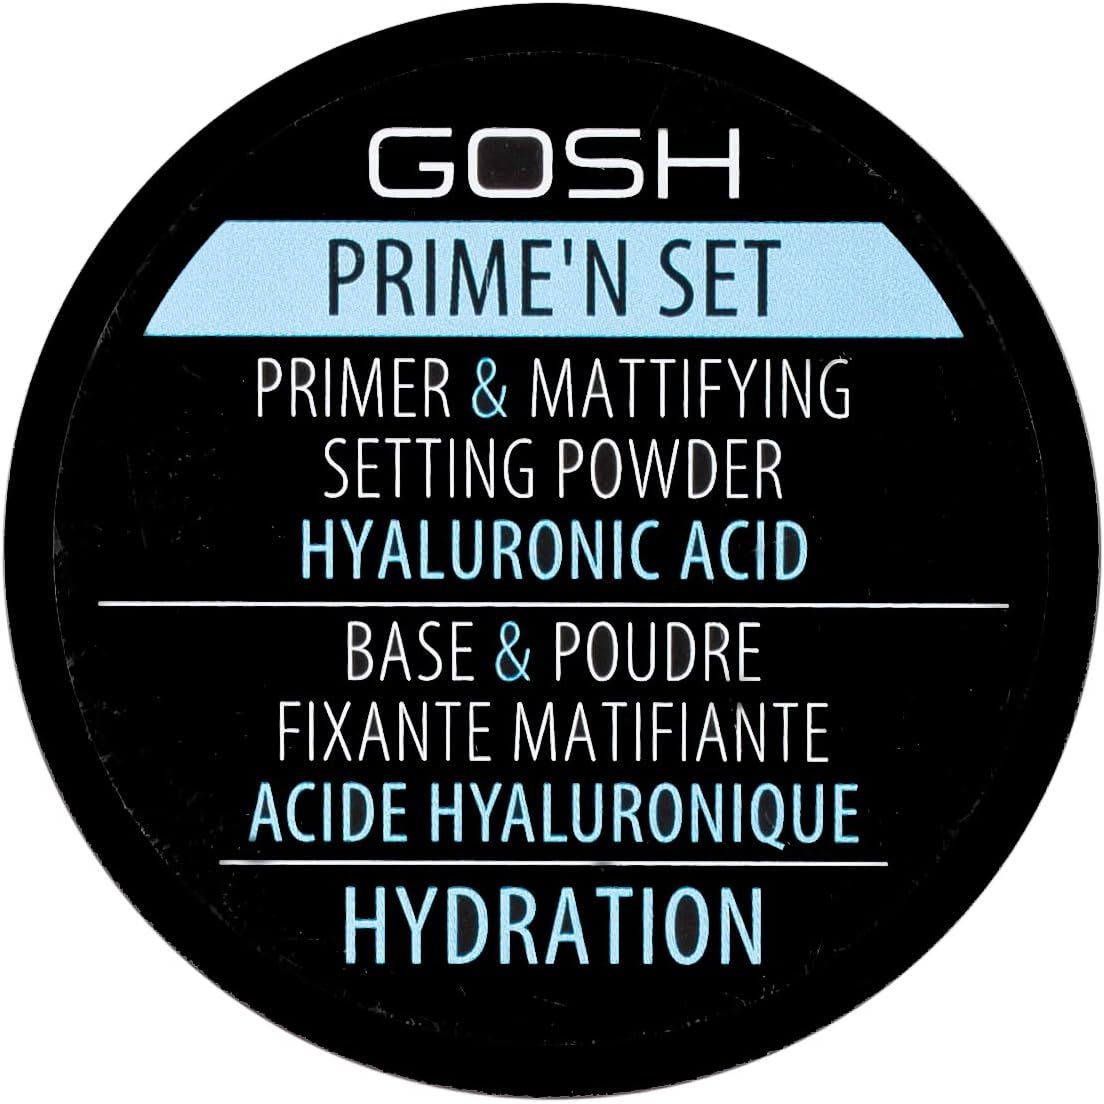 Основа під макіяж пудрова Gosh Prime'n Set Primer & Mattifying Setting Powder Hyaluronic Acid розсипчаста, 003 Hydration, 7 г - фото 1